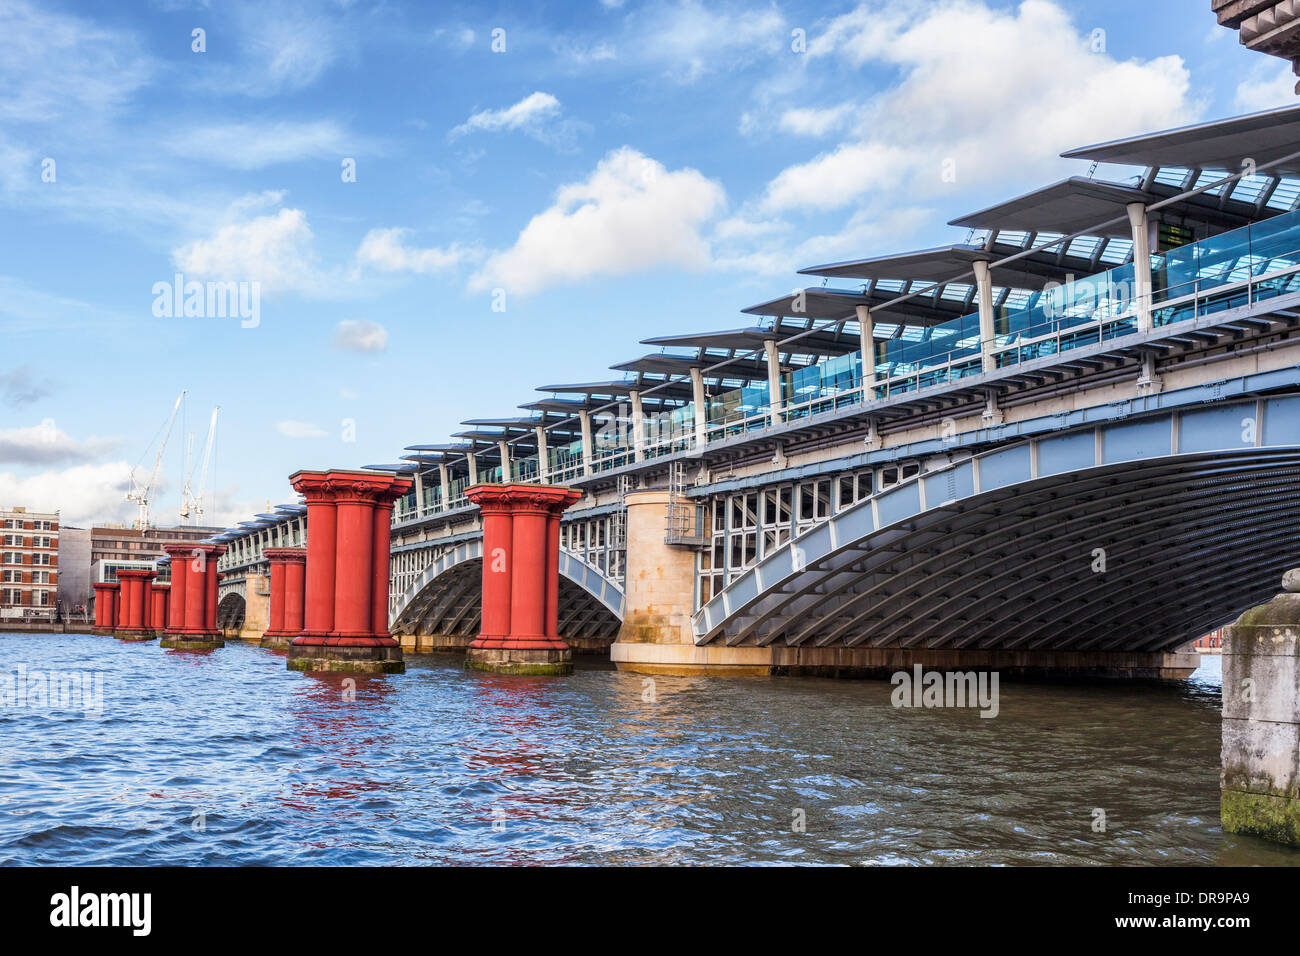 Modern Blackfriars railway station with solar energy panels and orange pillars of the old rail bridge, Thames river, London, UK Stock Photo